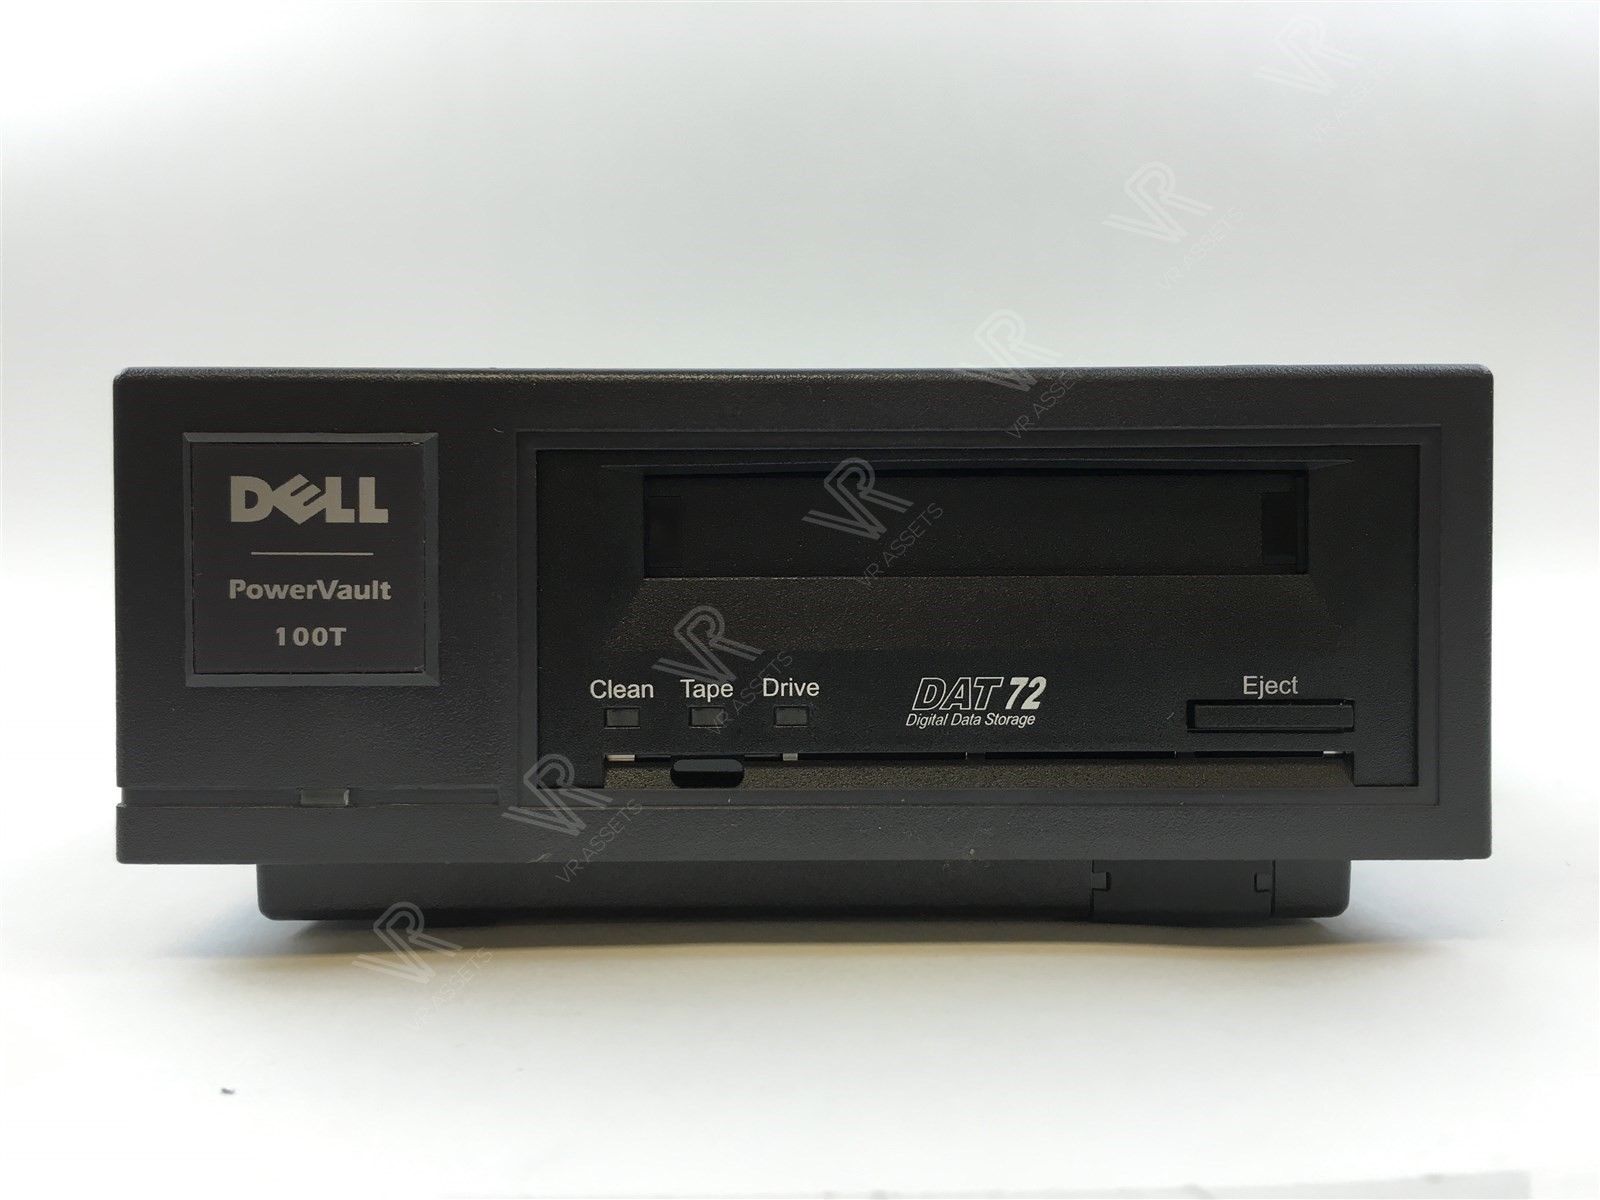 Dell PowerVault 100T DDS5 DAT72 LVD/SCSI External Tape Drive KG988 0KG988